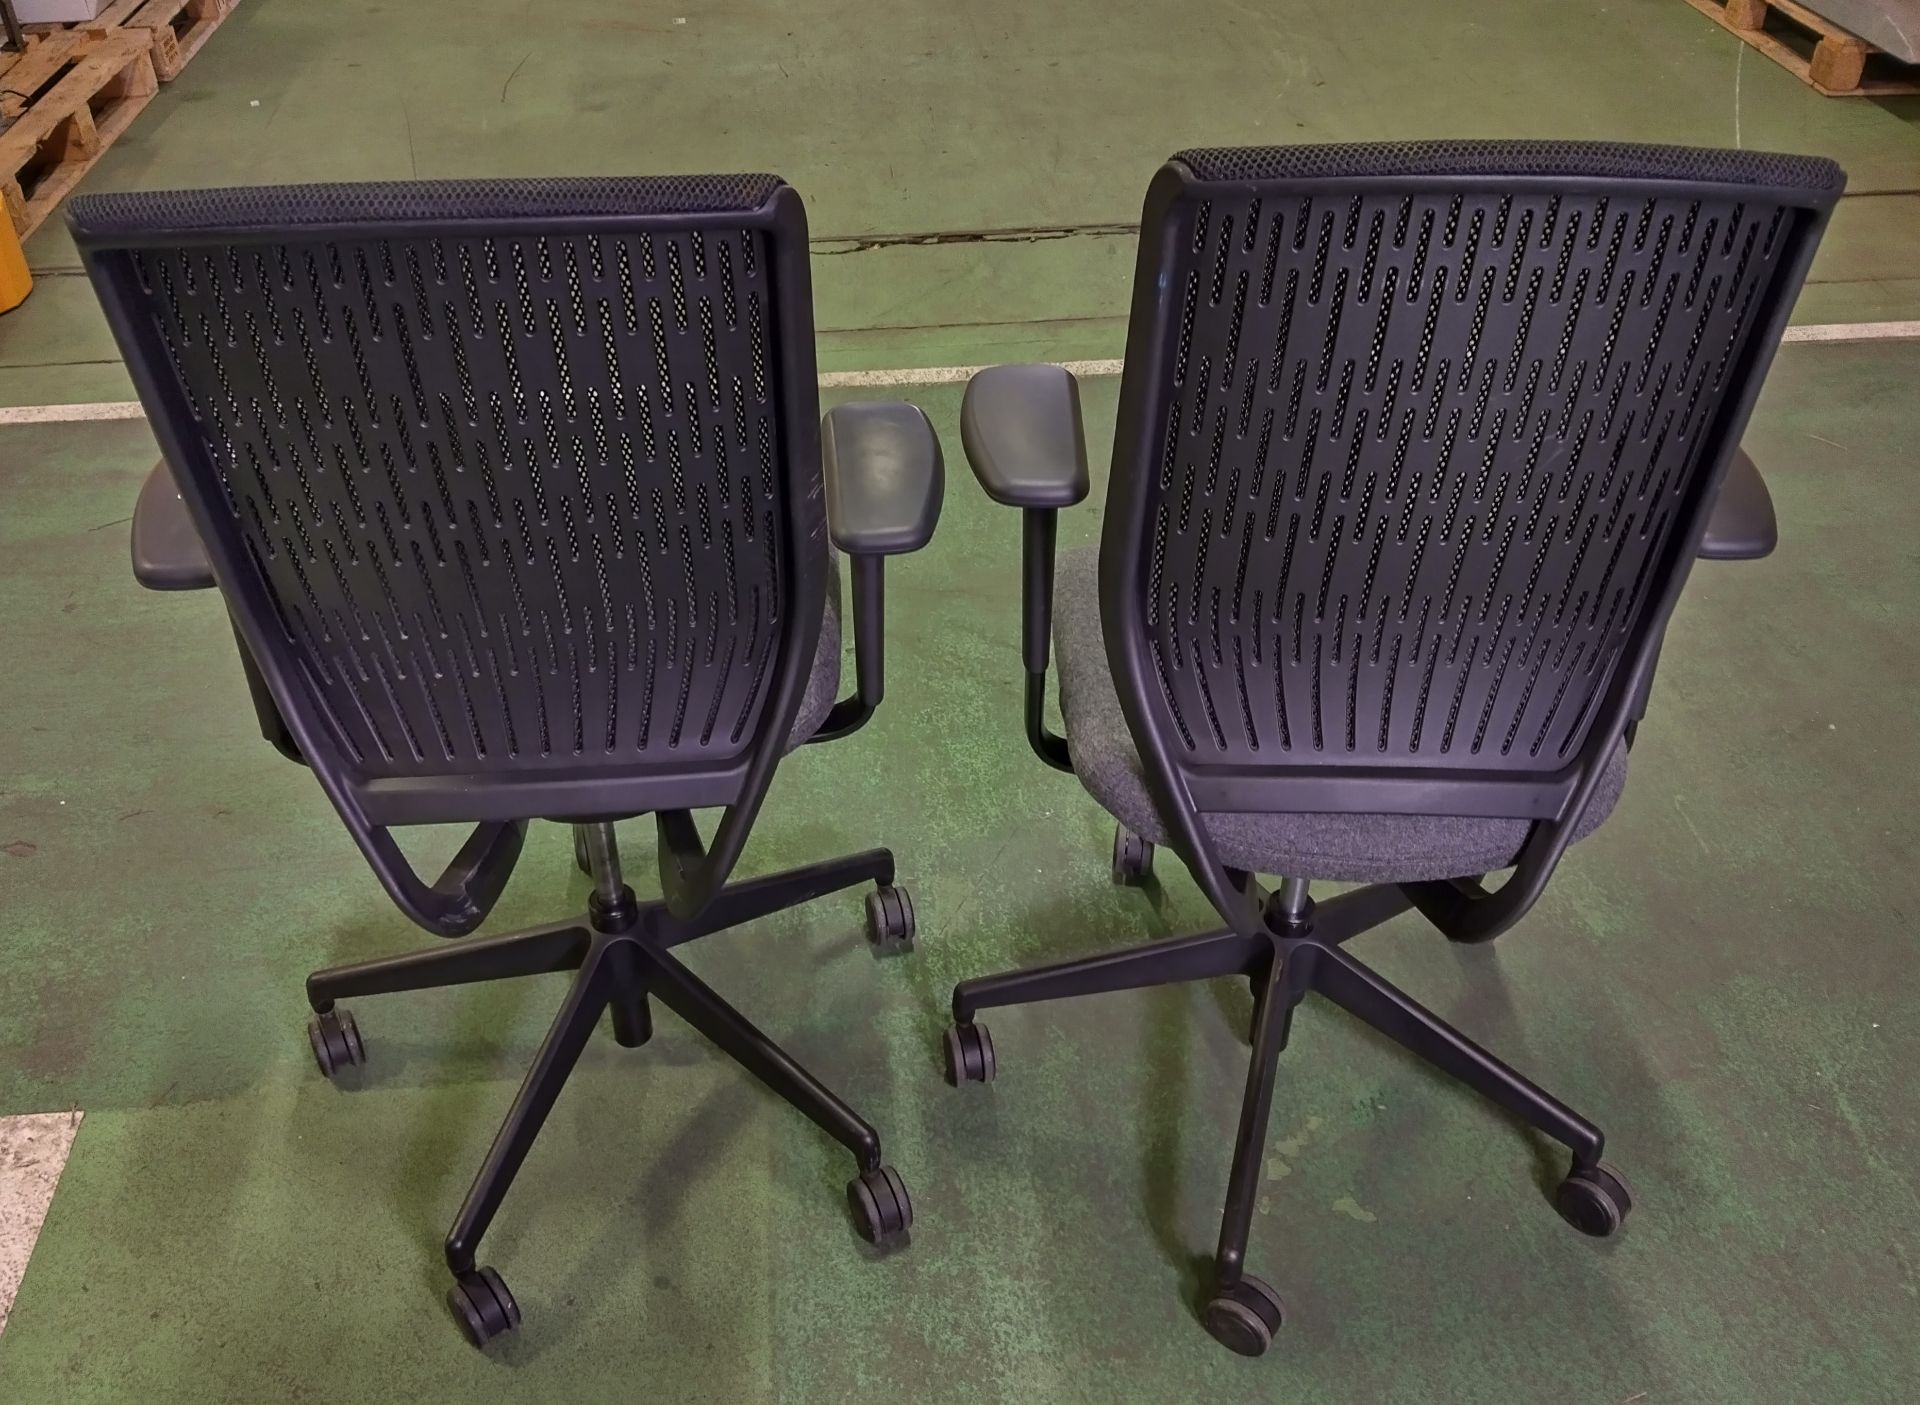 2x Evolve Senator mesh back office chairs - fully adjustable - Image 2 of 2